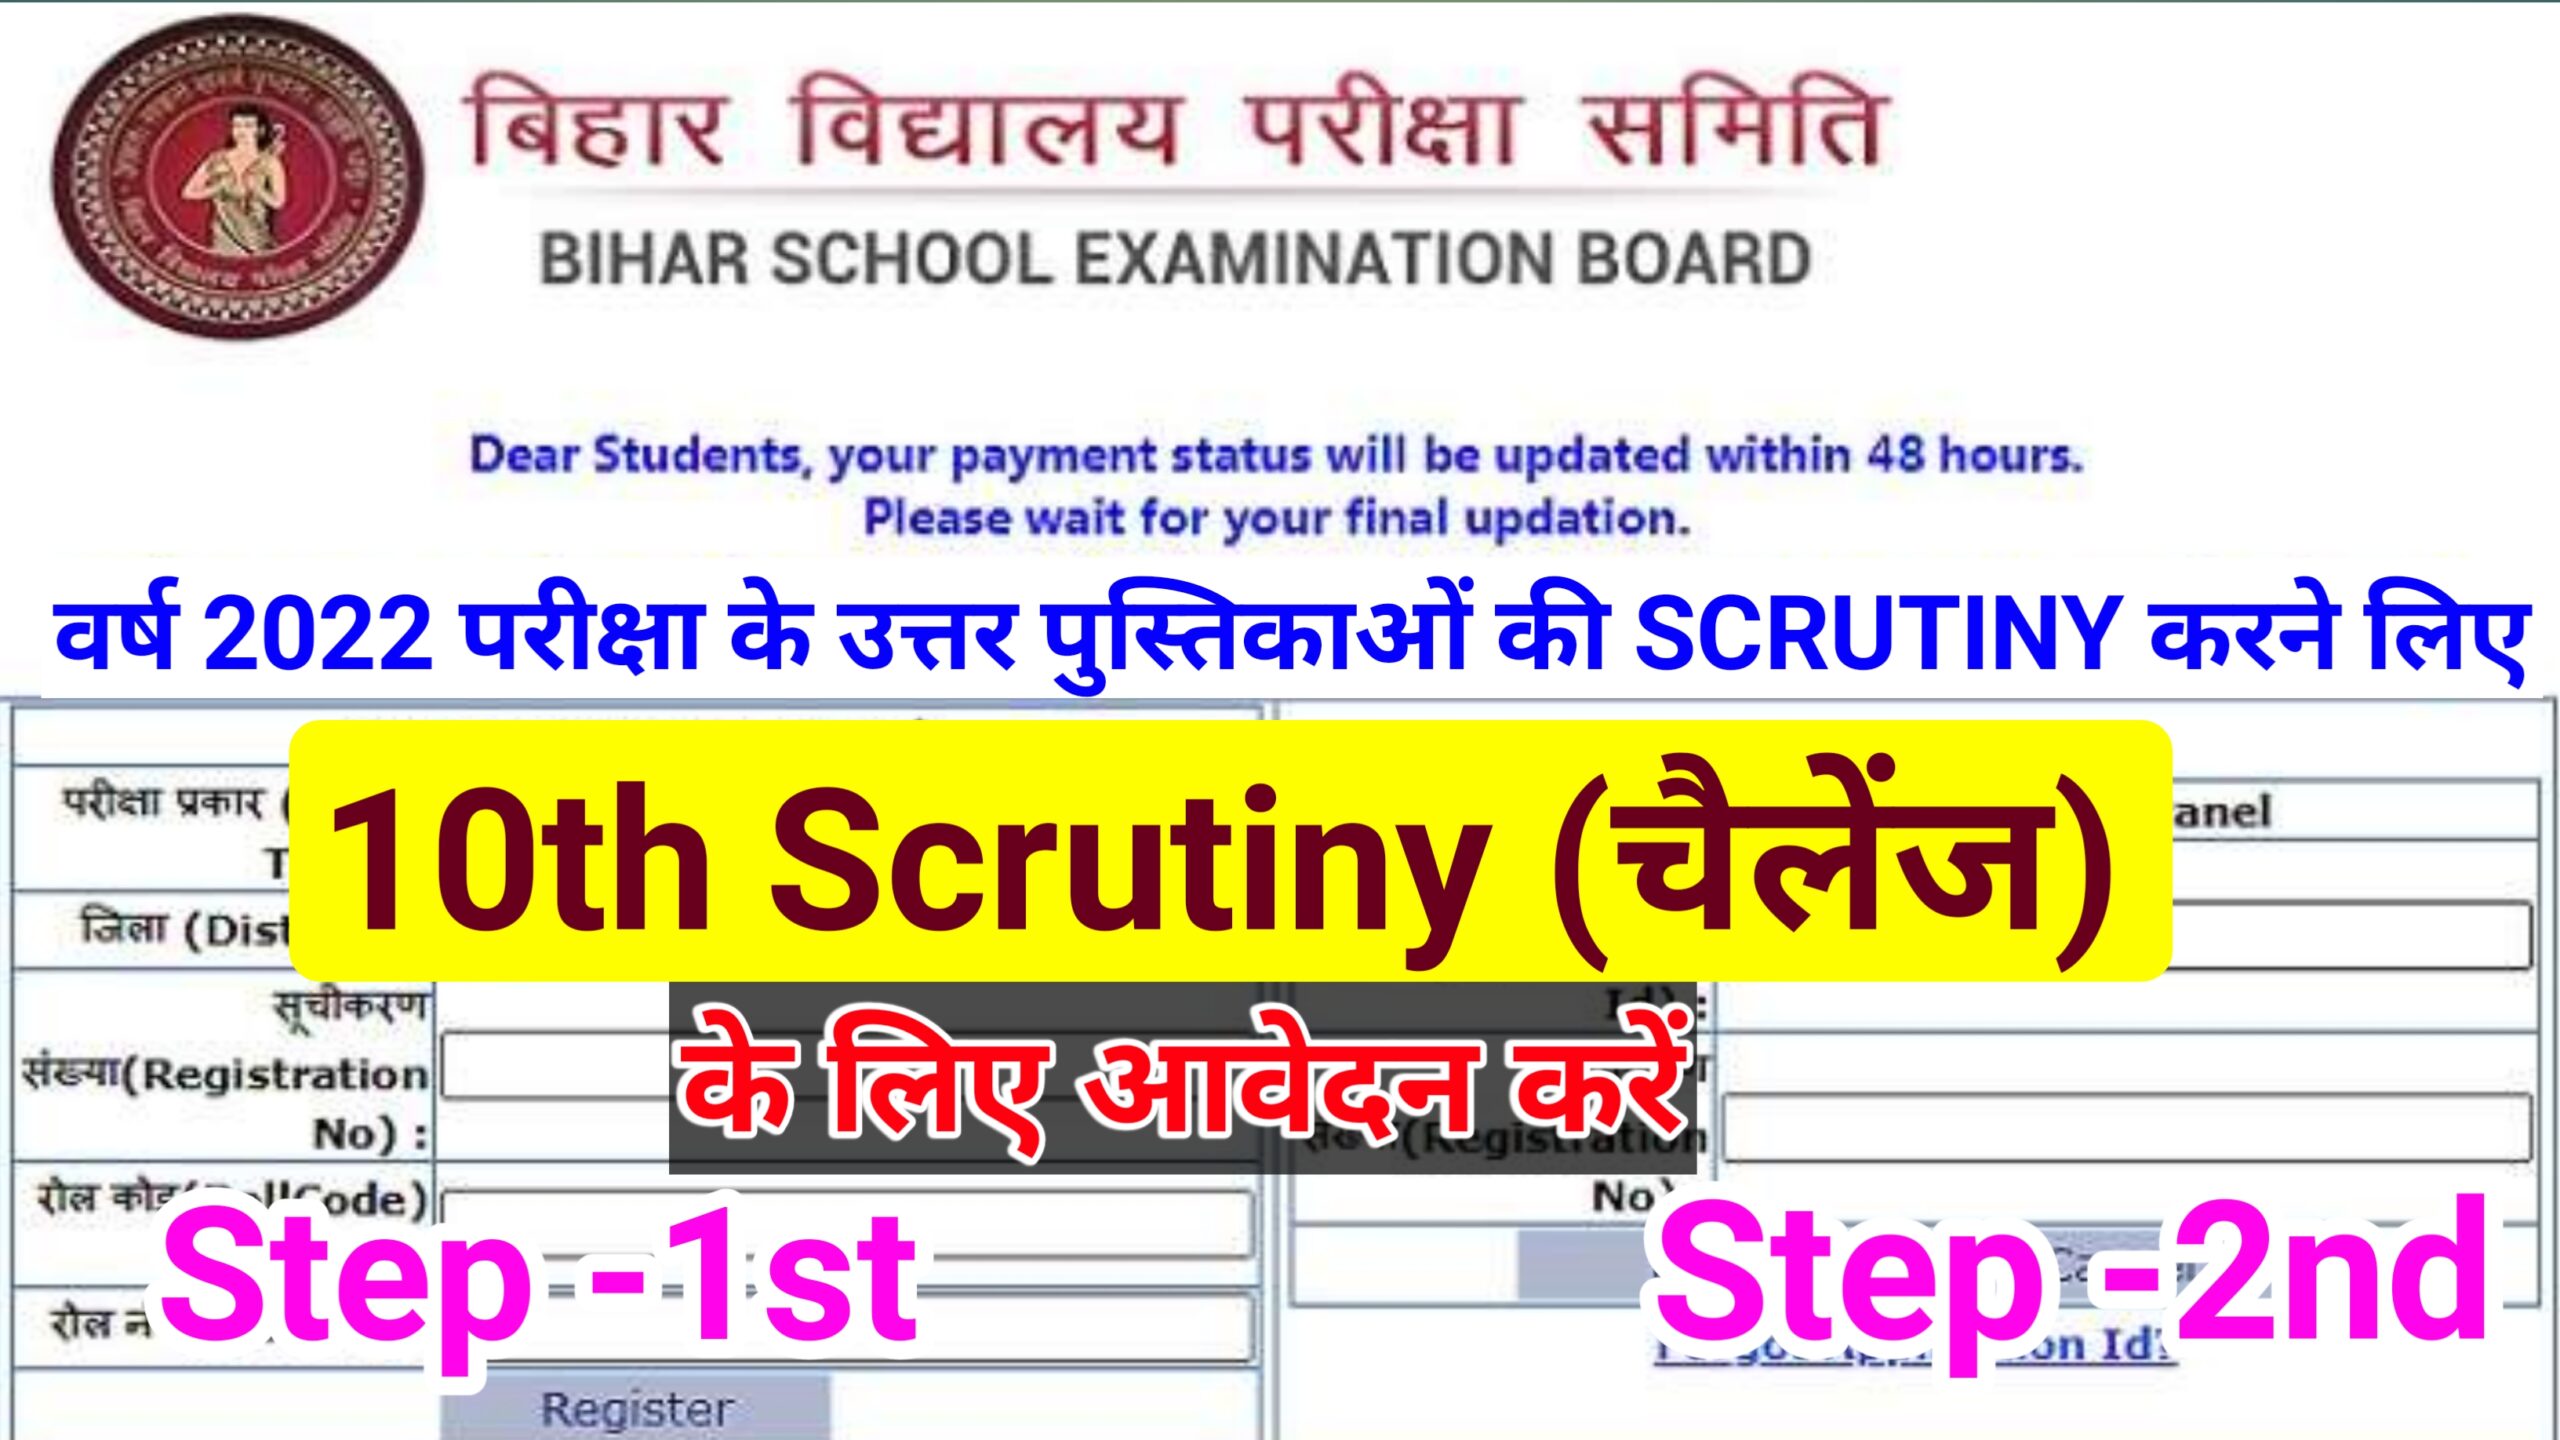 Bihar Board 10th Scrutiny Apply Online 2022 Form